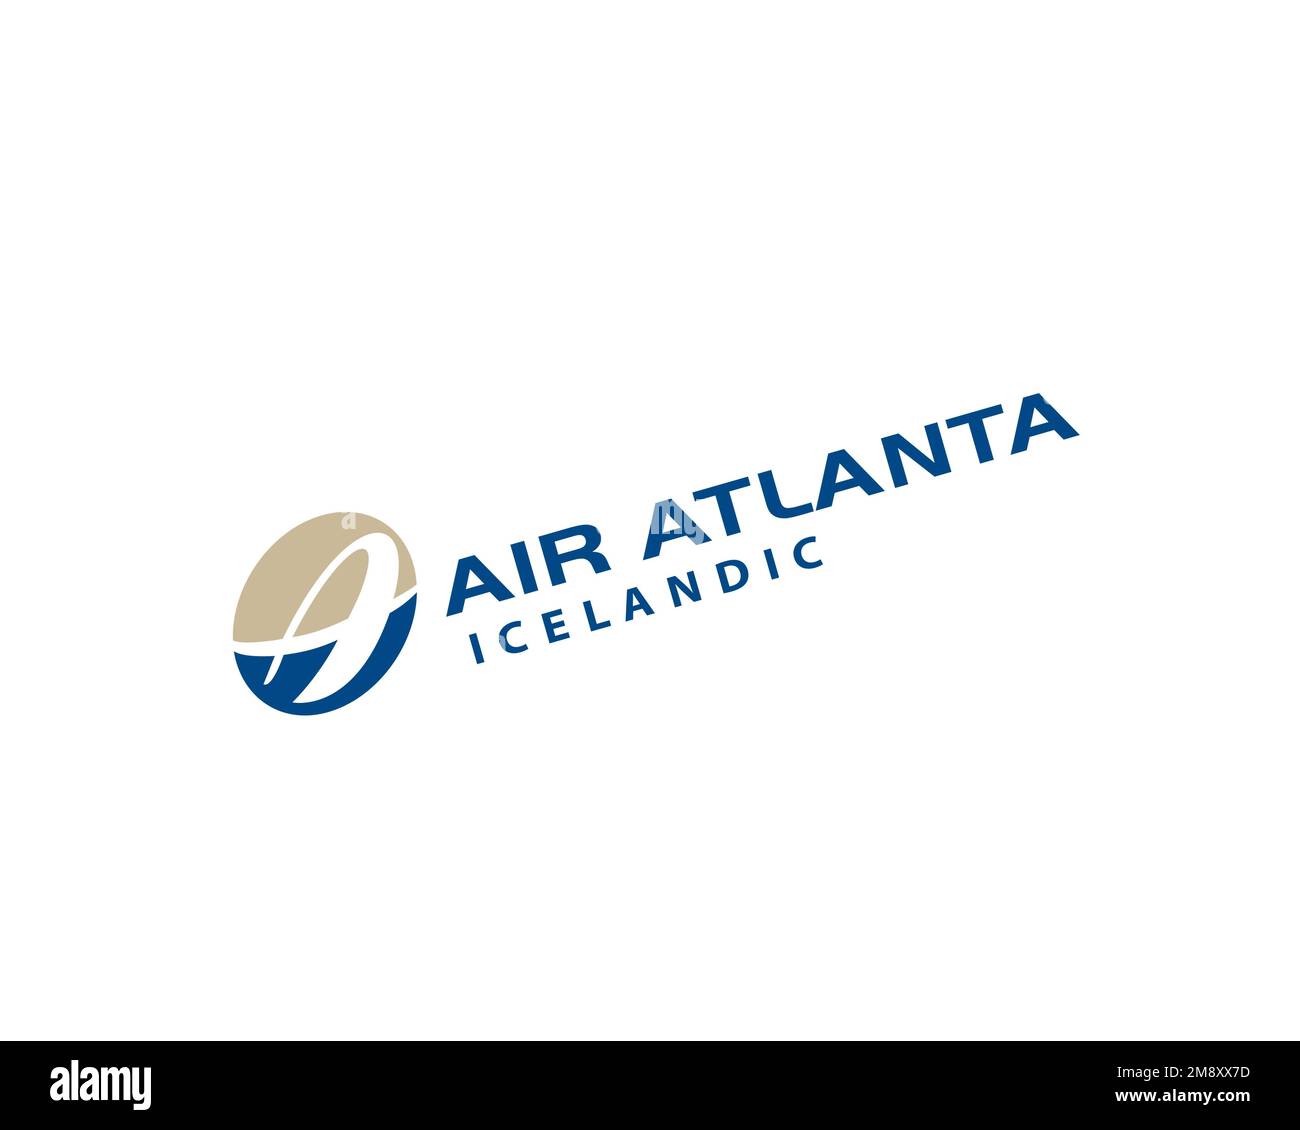 Air Atlanta islandese, logo ruotato, sfondo bianco Foto Stock